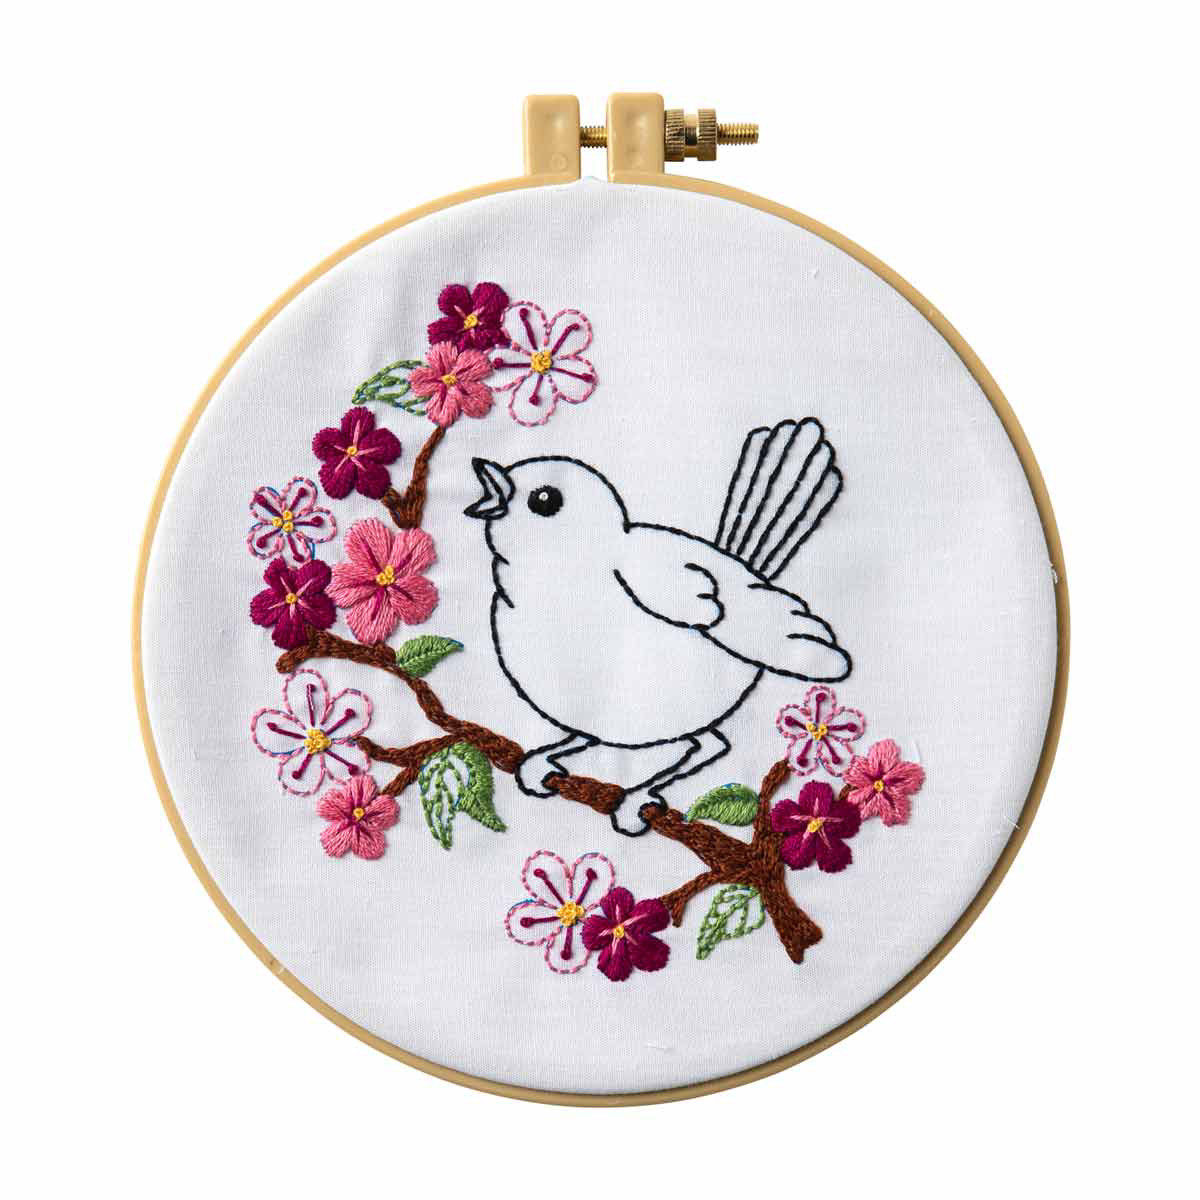 Bucilla Stamped Embroidery Kit, Cherry Blossom Birdie, 6 in.